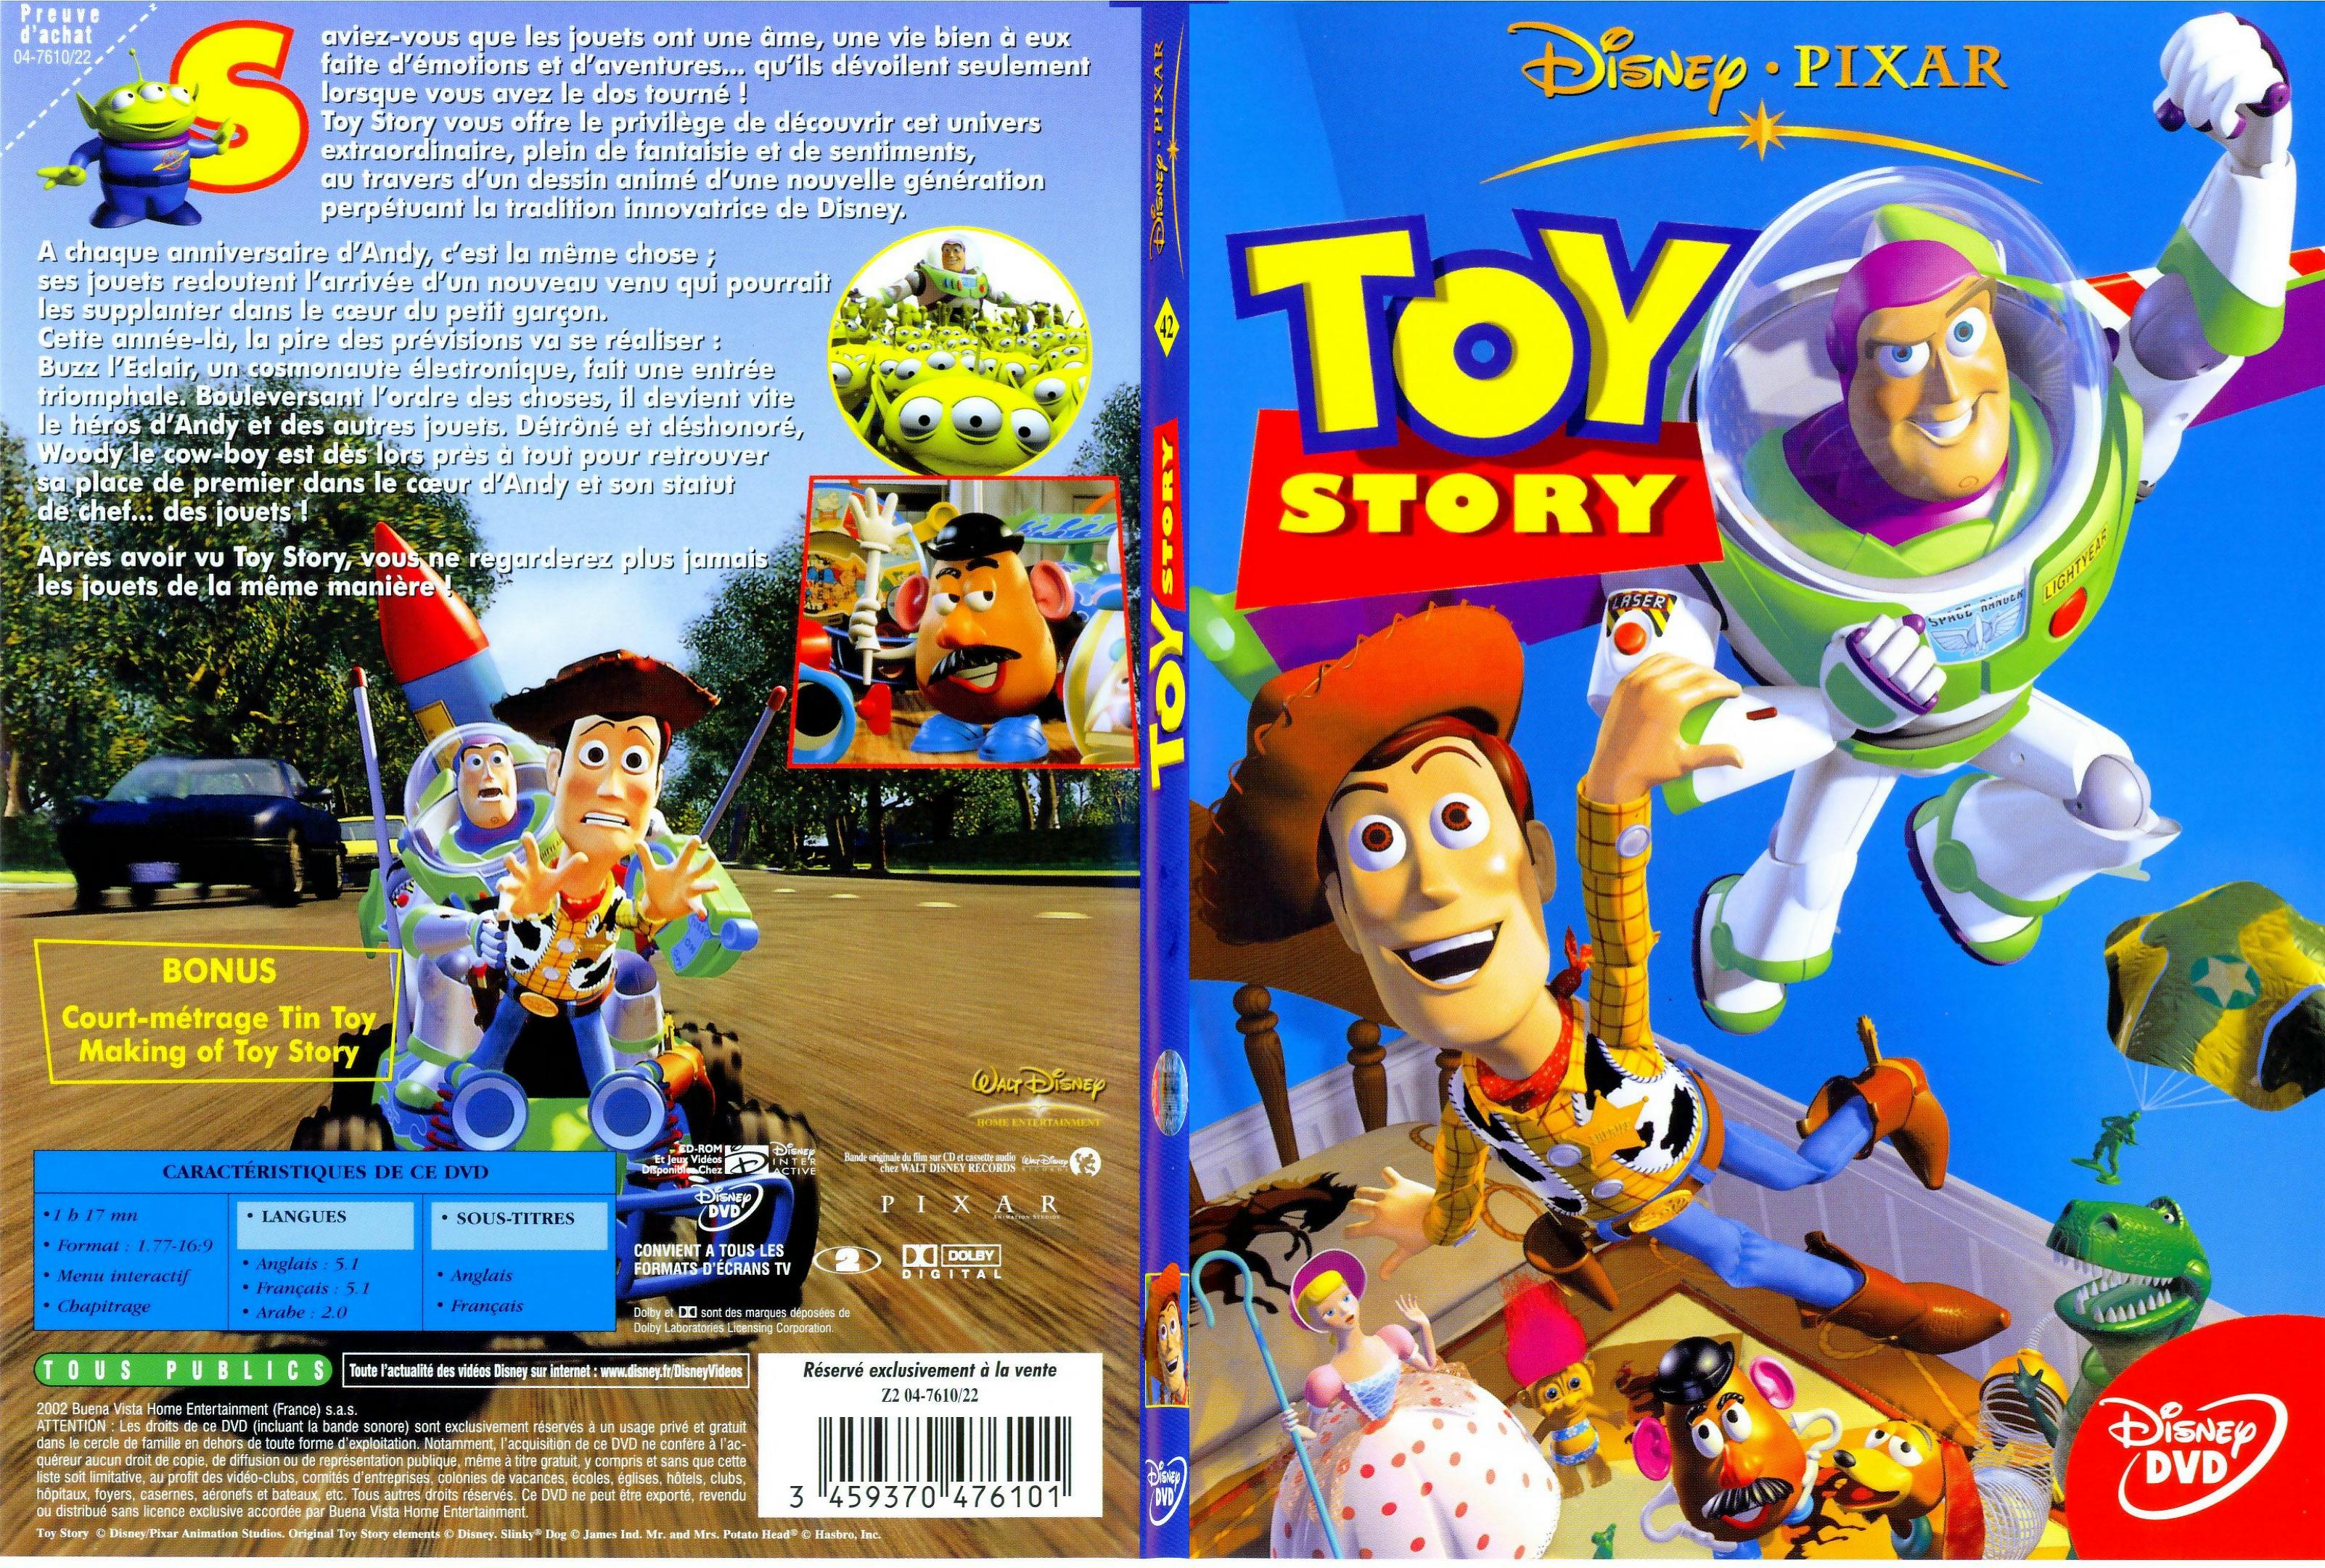 Jaquette DVD Toy story - SLIM v2